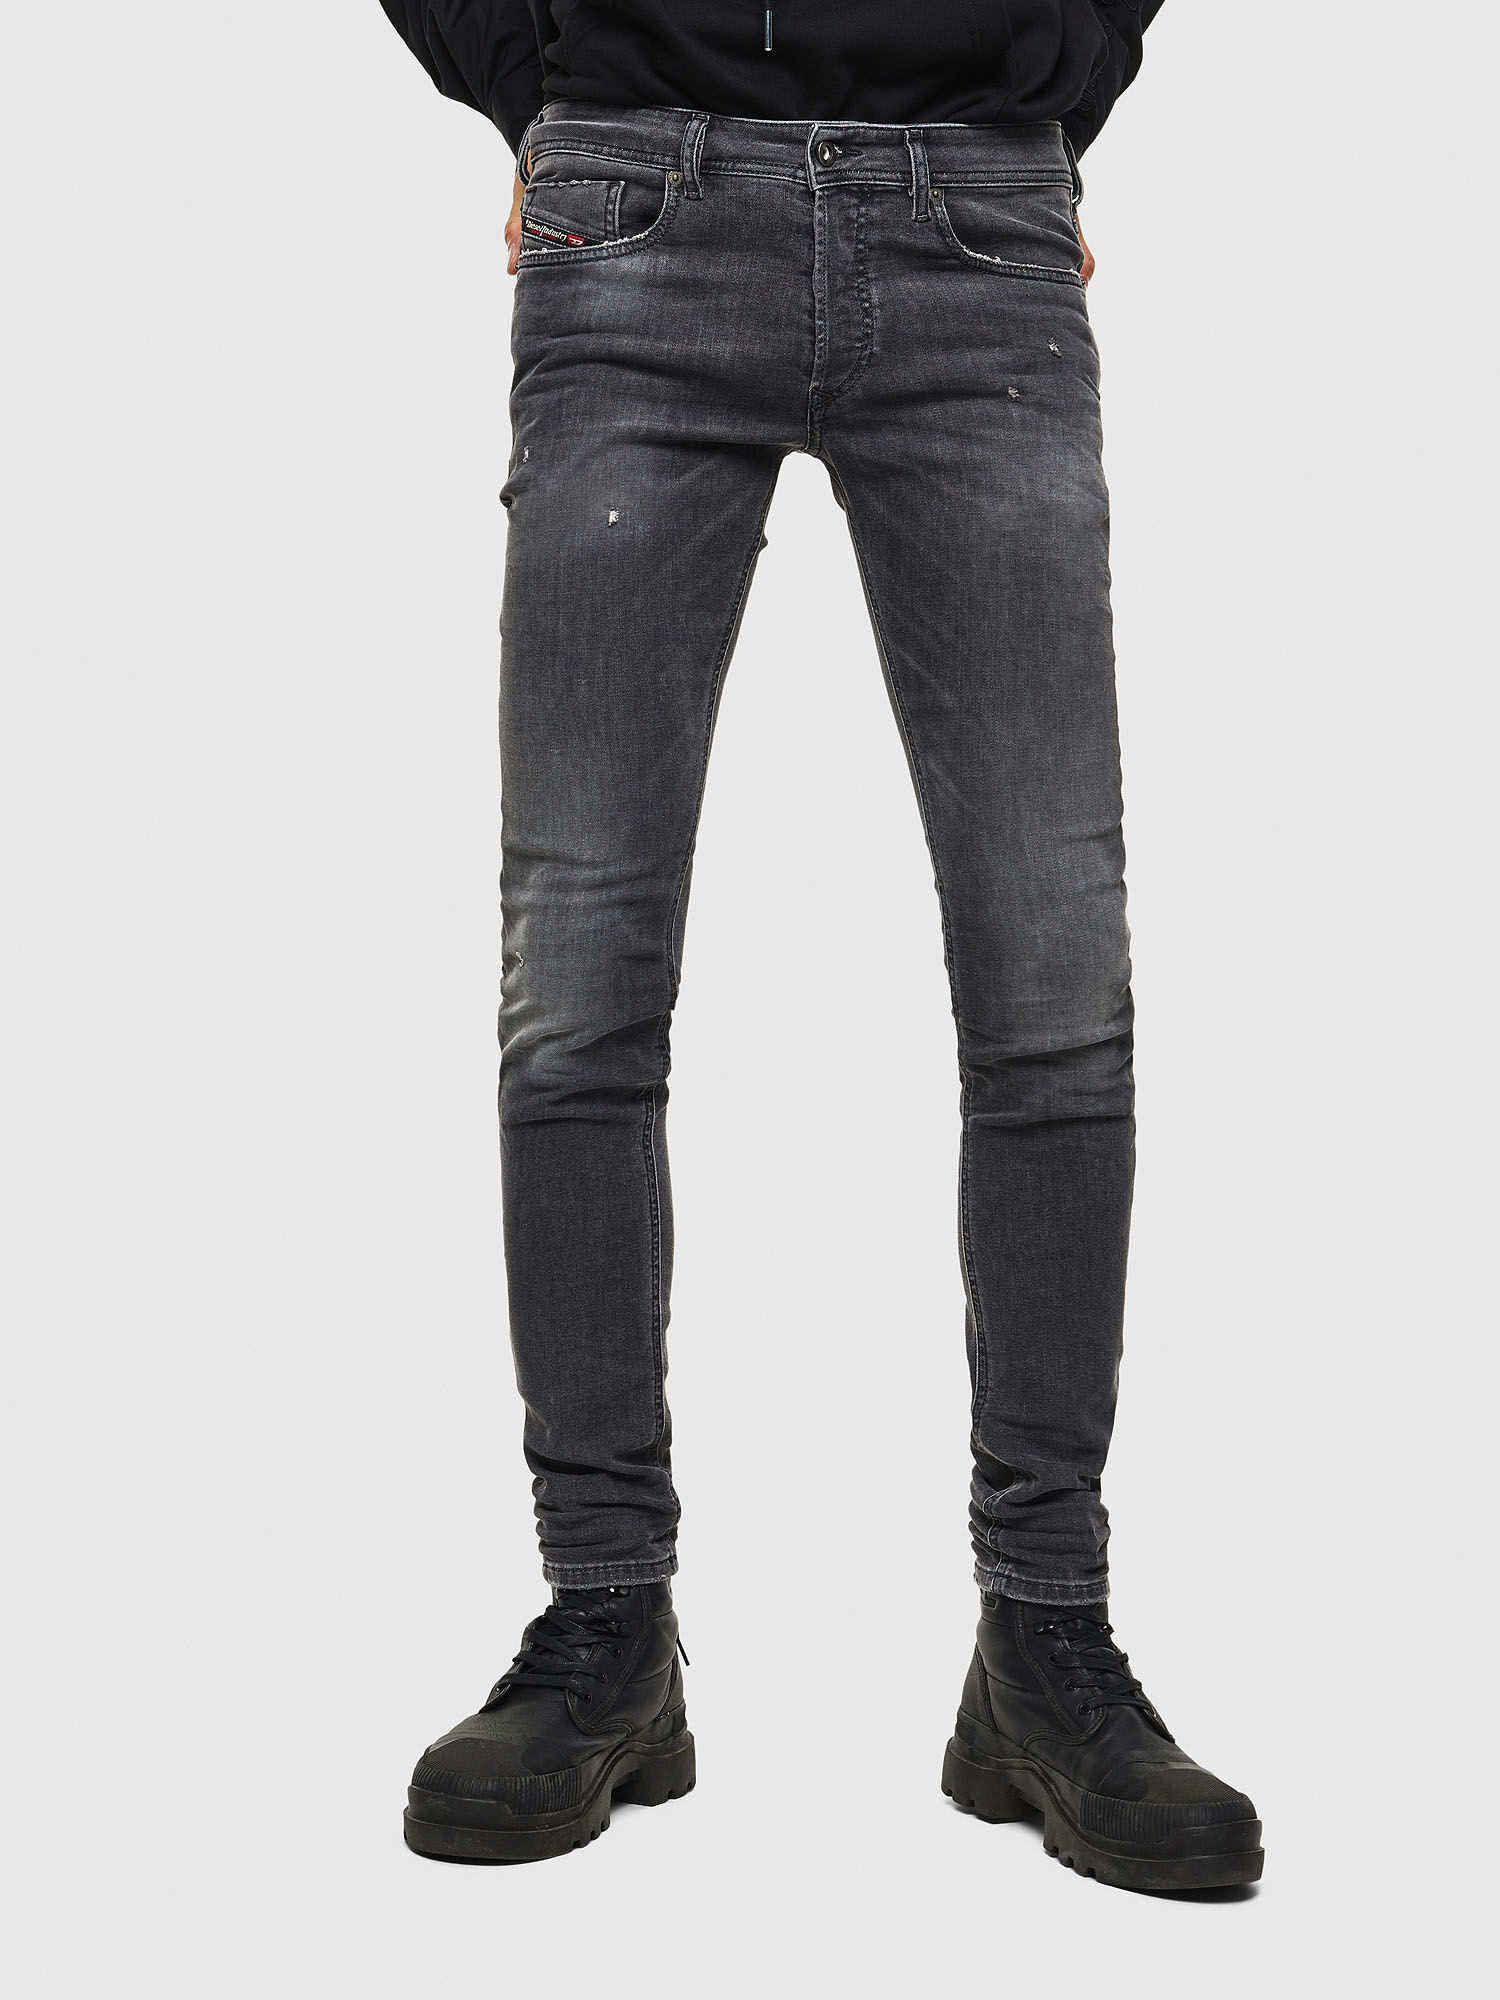 dark gray denim jeans